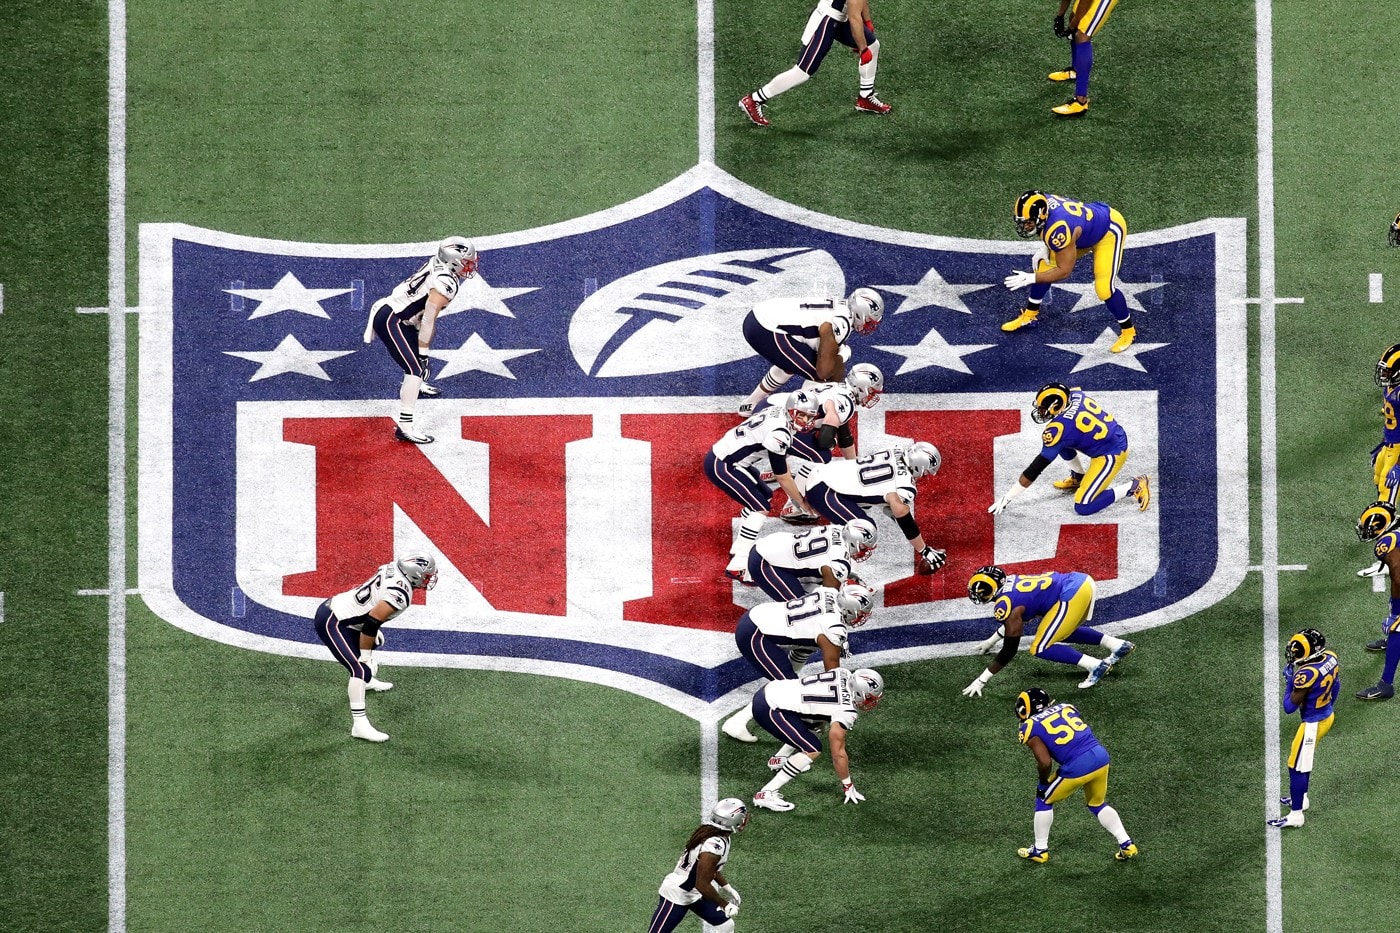 2020 NFL Draft Proceed Virtual format national football league coronavirus covid-19